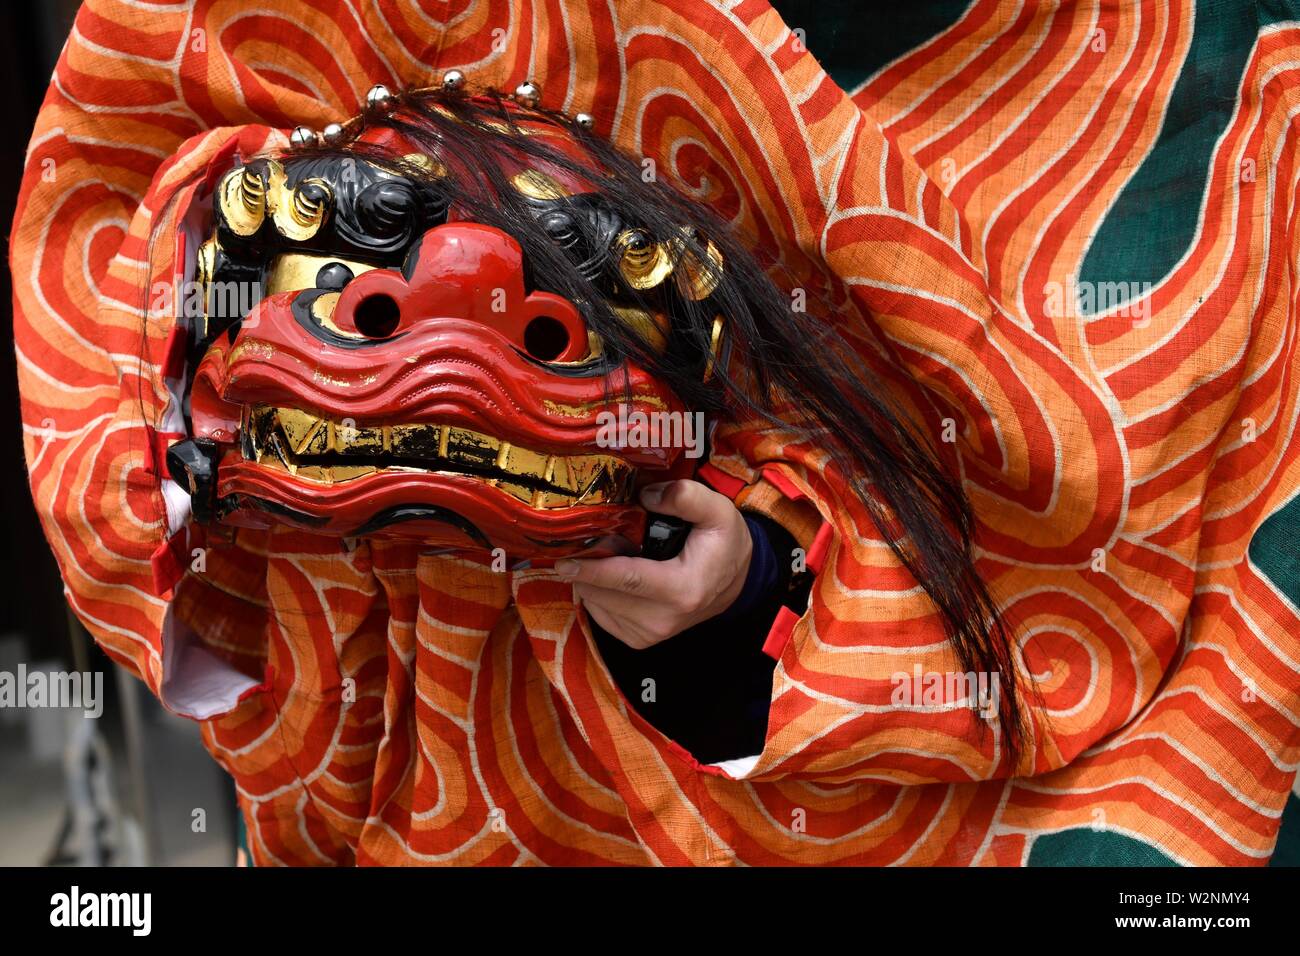 La danza del león, Furukawa Festival, Hida Furukawa, Japón, Asia. Foto de stock